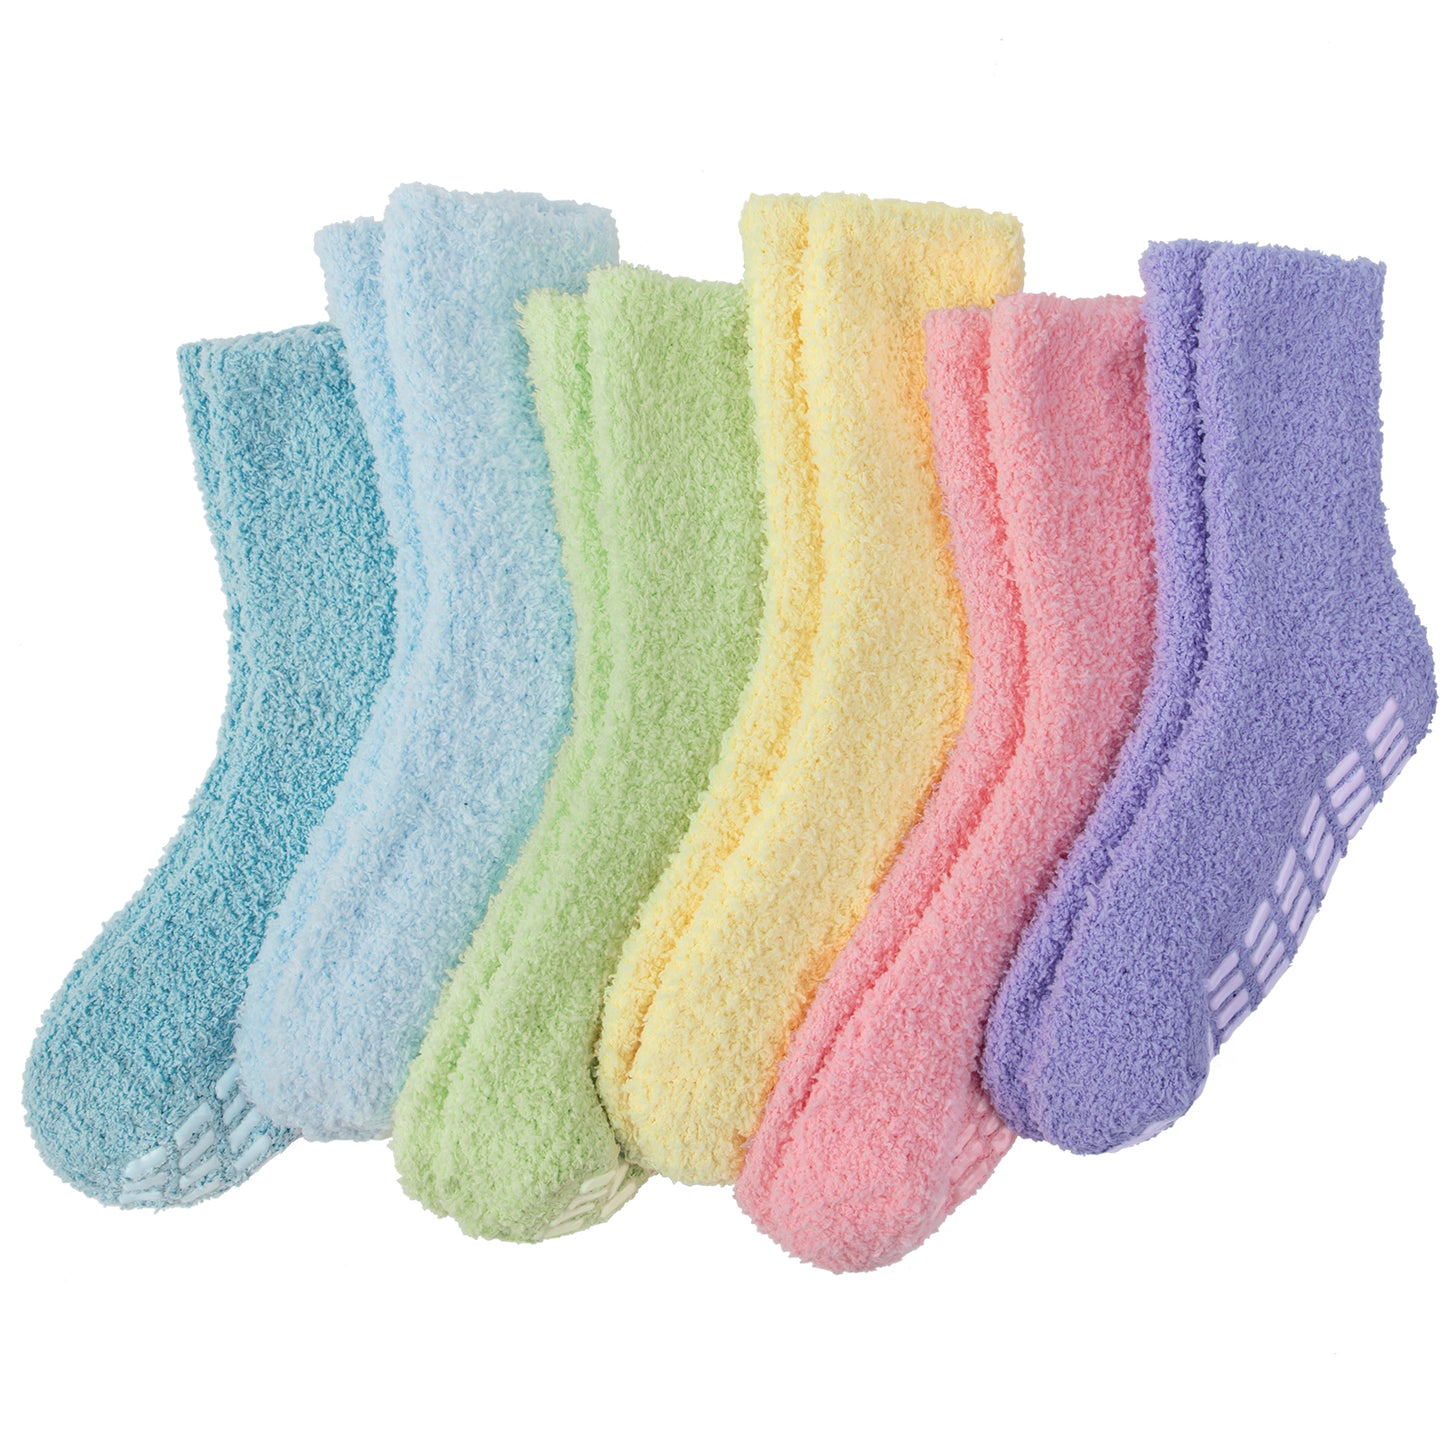 Loritta Winter Womens Fuzzy Socks Soft Warm Cozy Fluffy Soft Slipper Socks Gifts 6 Pairs